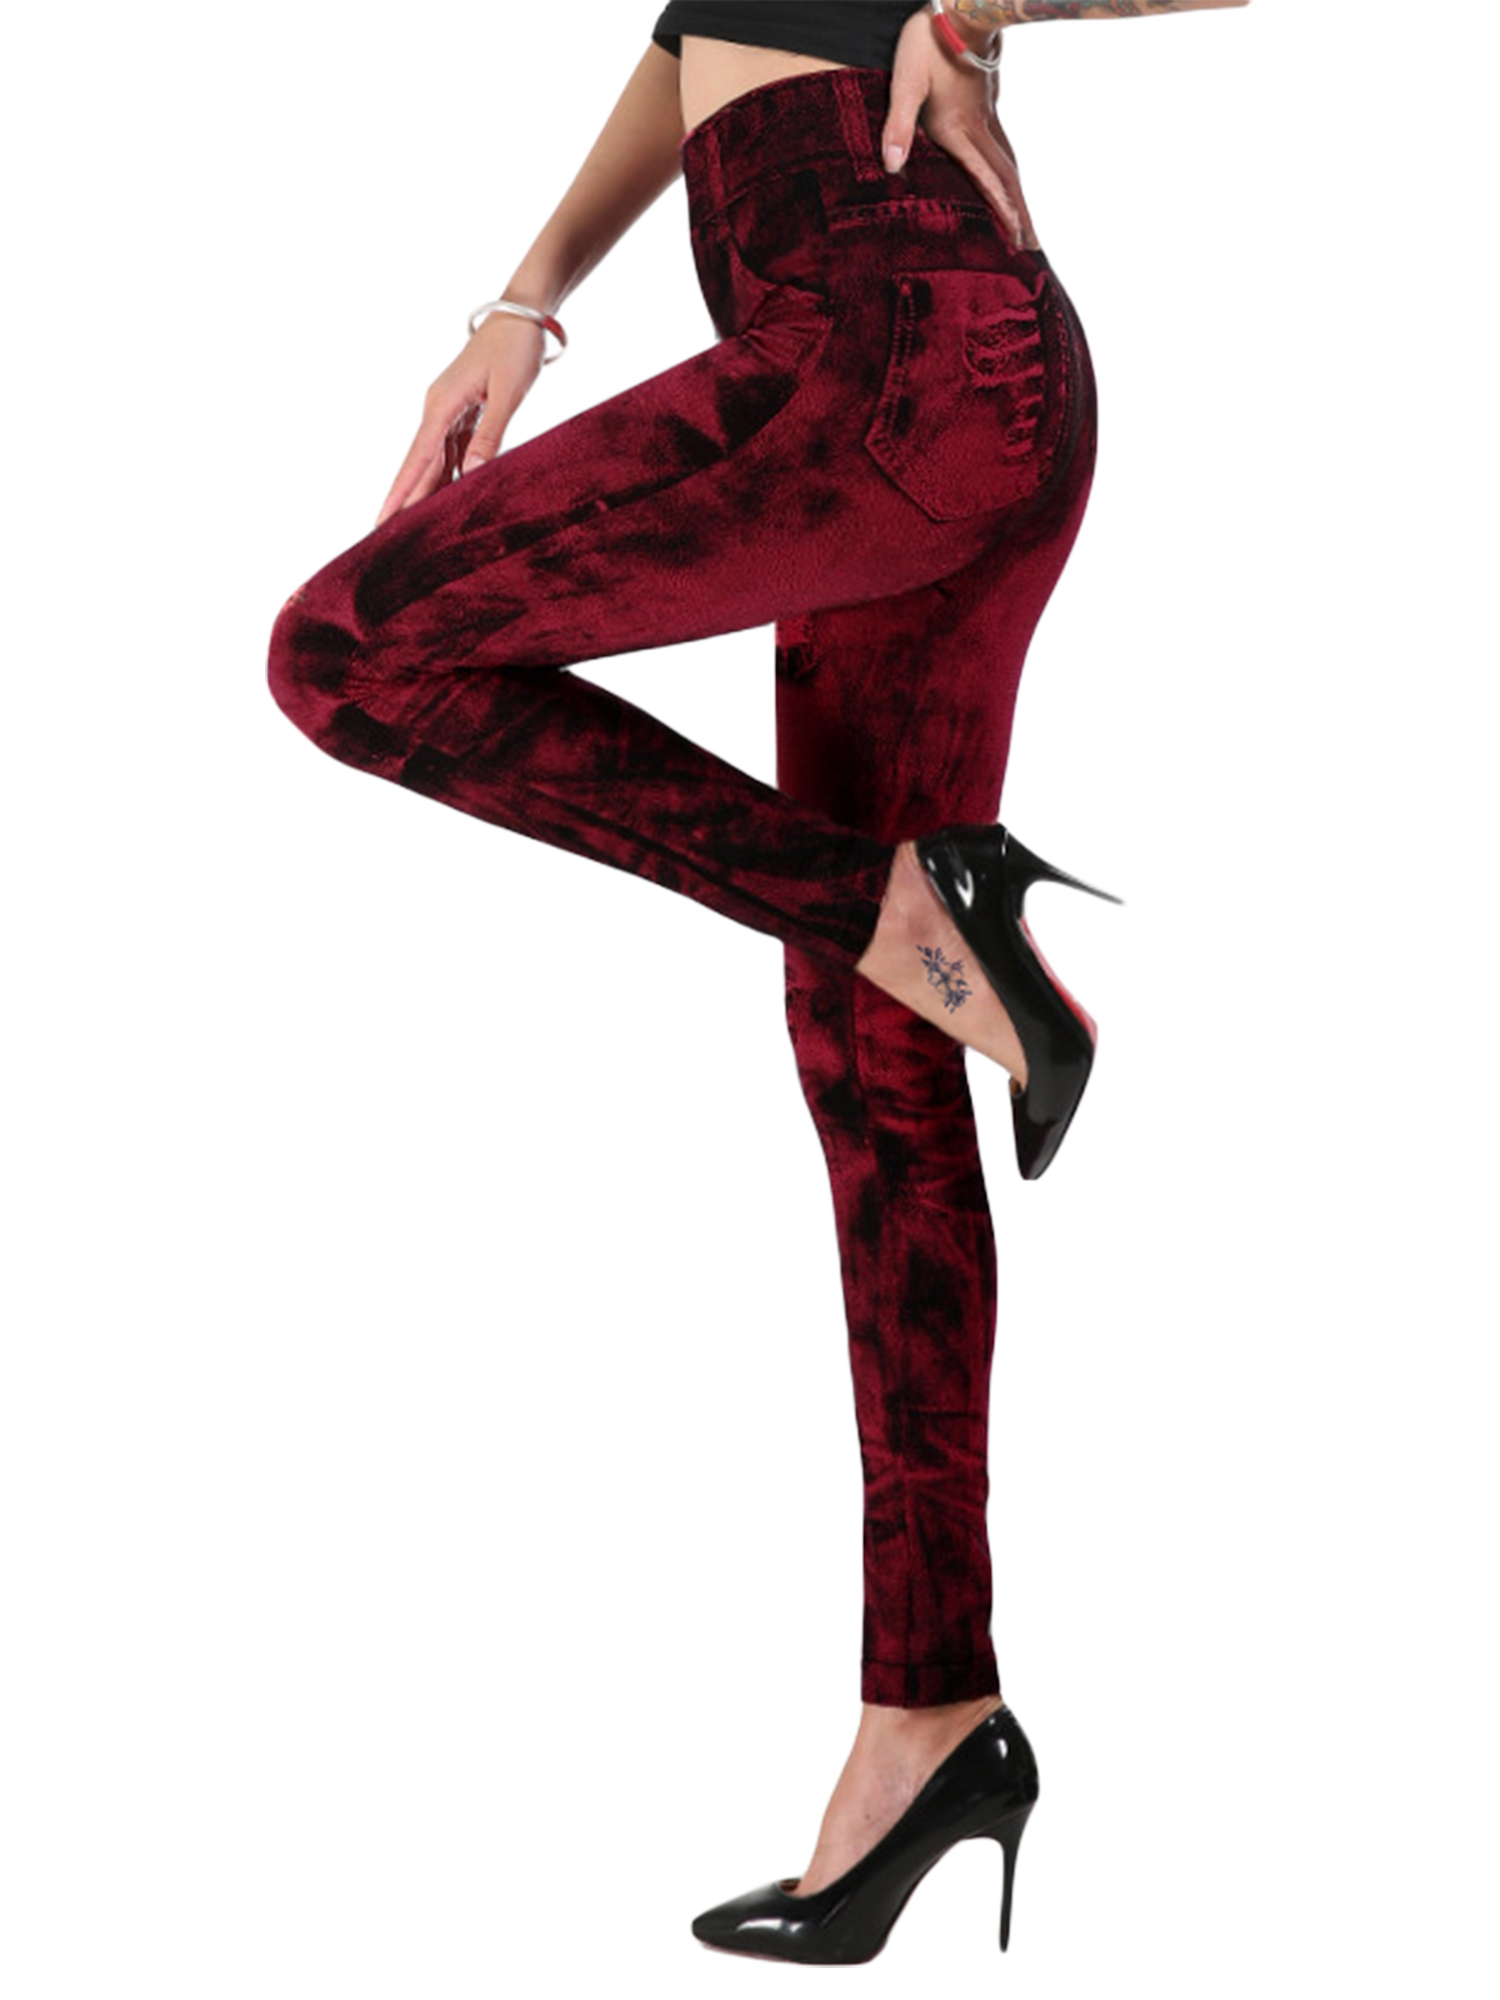 Avamo High Waist Jeggings for Women Denim Print Seamless Stretch Leggings Pants Ladies Casual Slim Fit Trousers - image 1 of 2